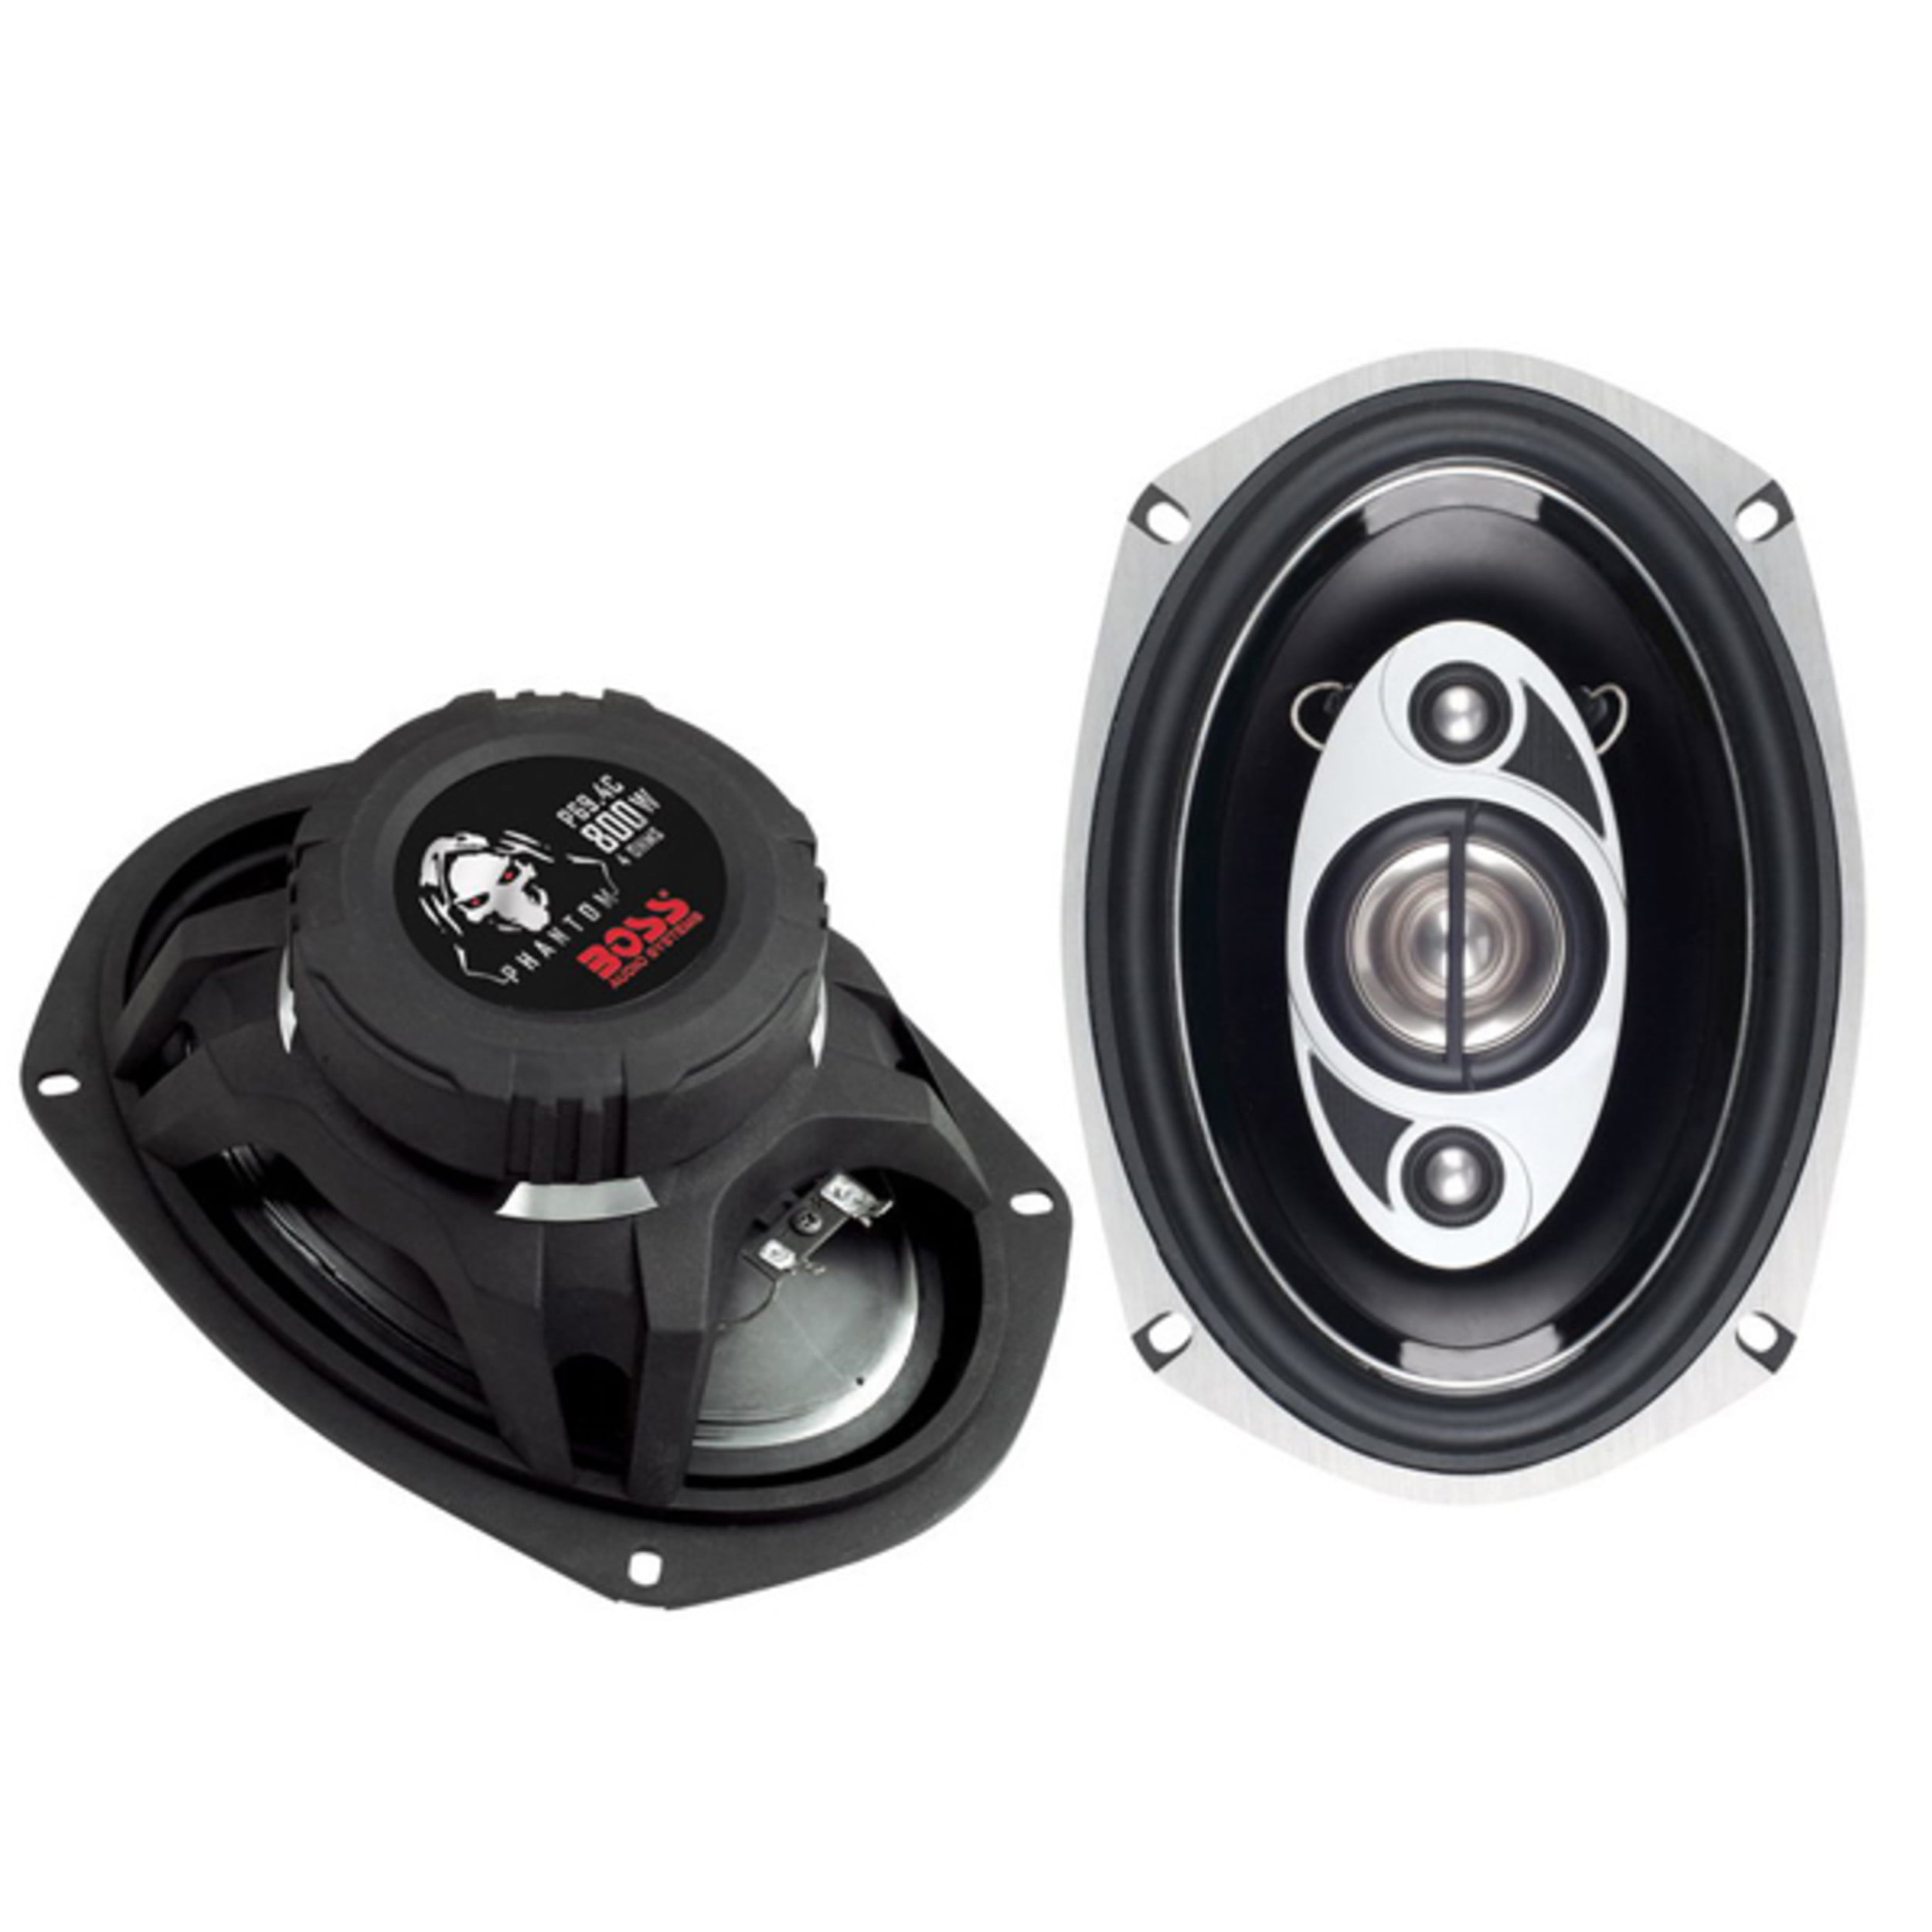 Sold in Pairs BOSS Audio Full Range 3 Way Car Speakers 400 Watt RMS 4x10 inch 